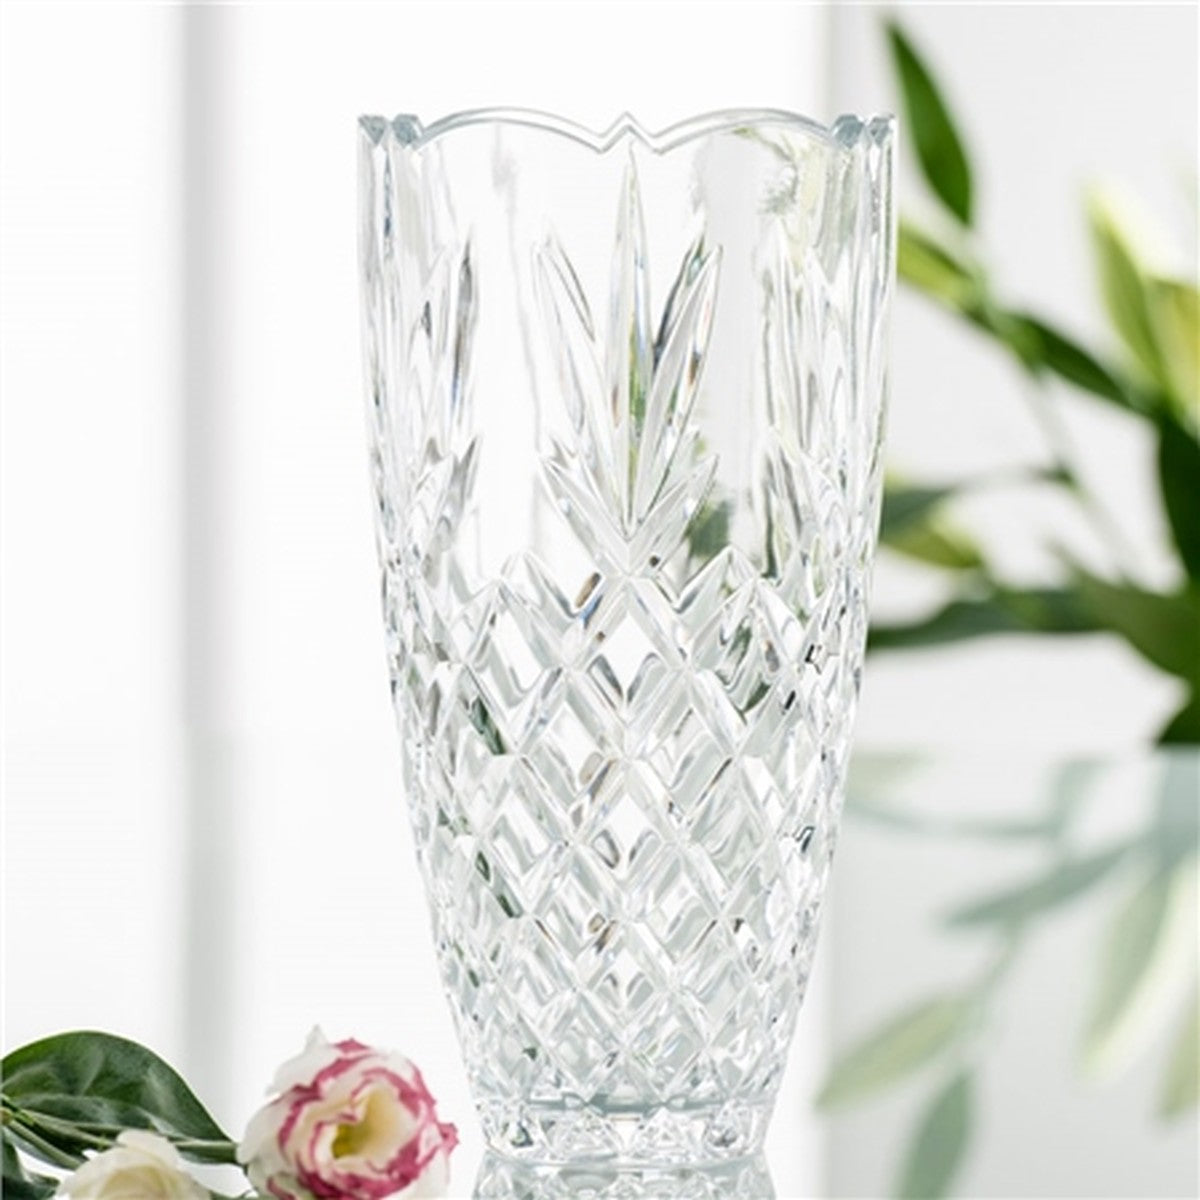 Galway Renmore 10" Vase, Clear, Crystal